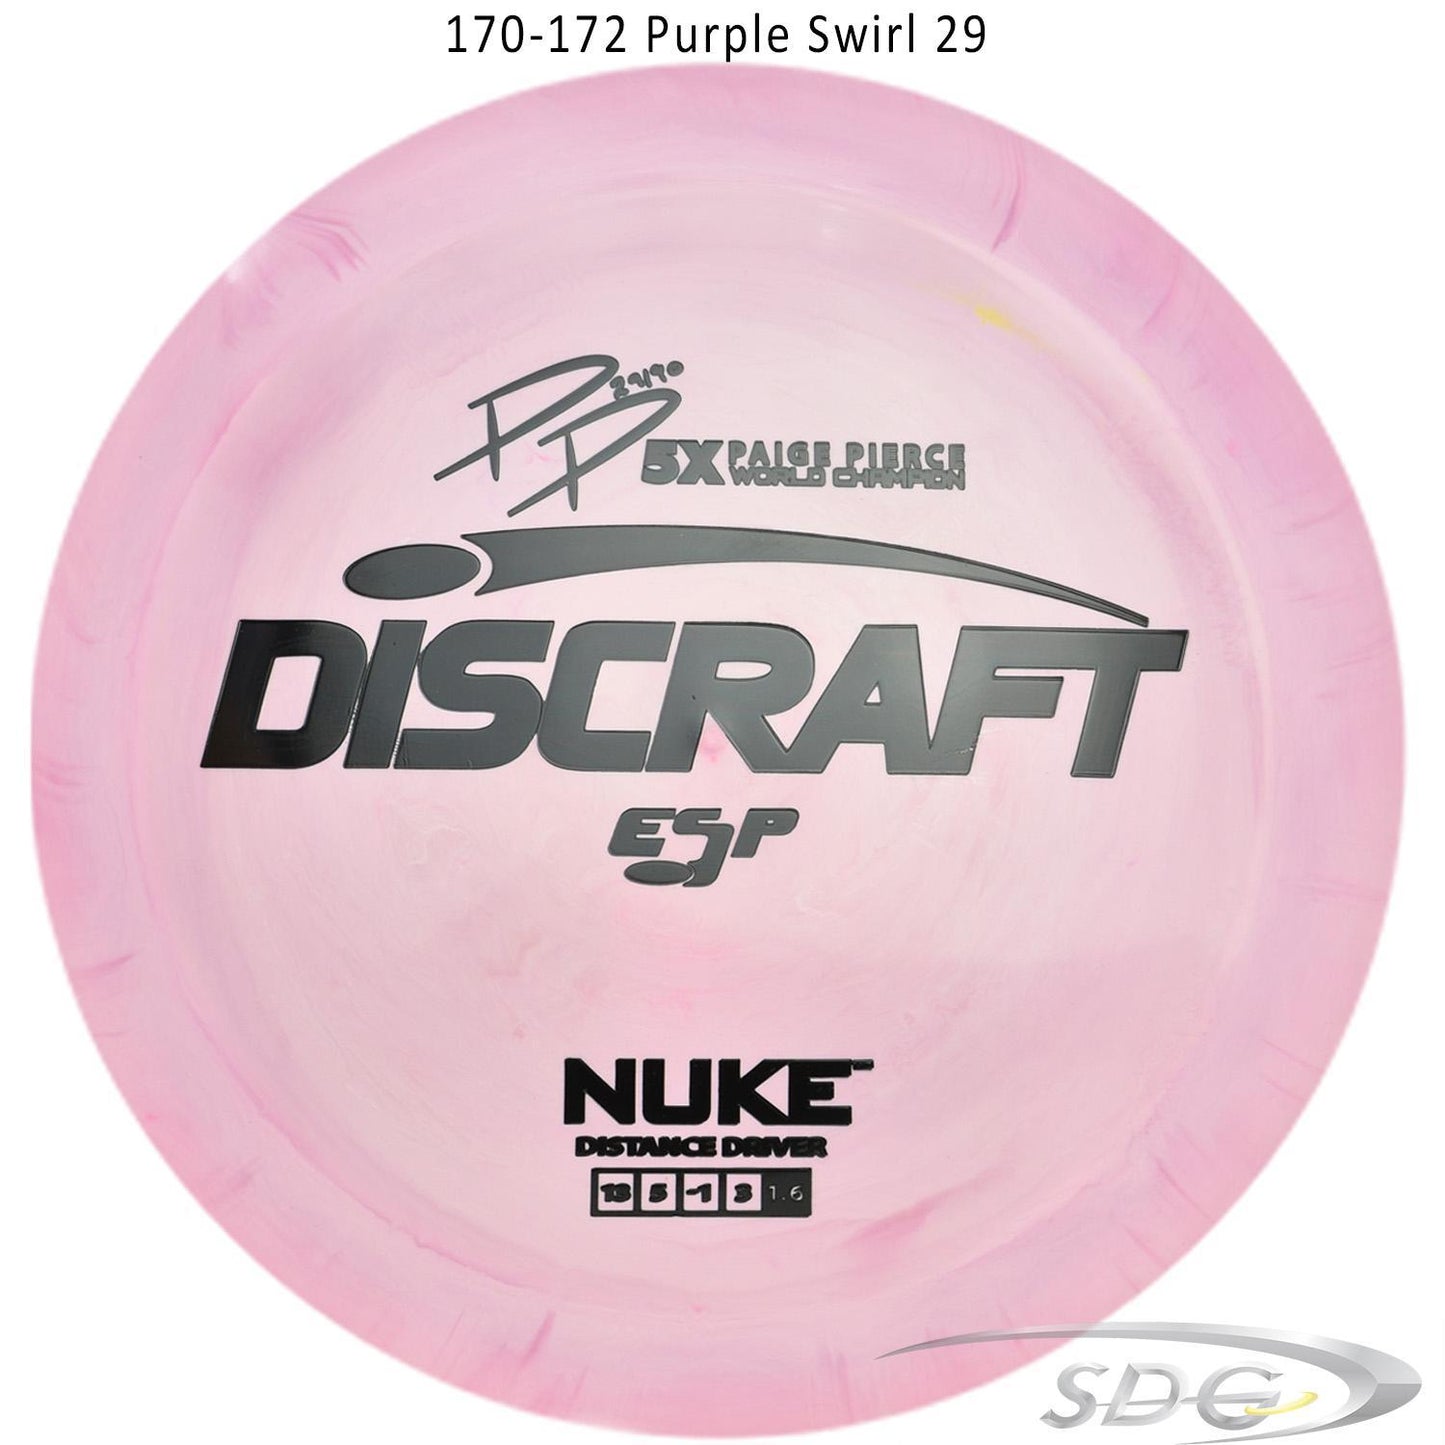 discraft-esp-nuke-paige-pierce-signature-disc-golf-distance-driver 170-172 Purple Swirl 29